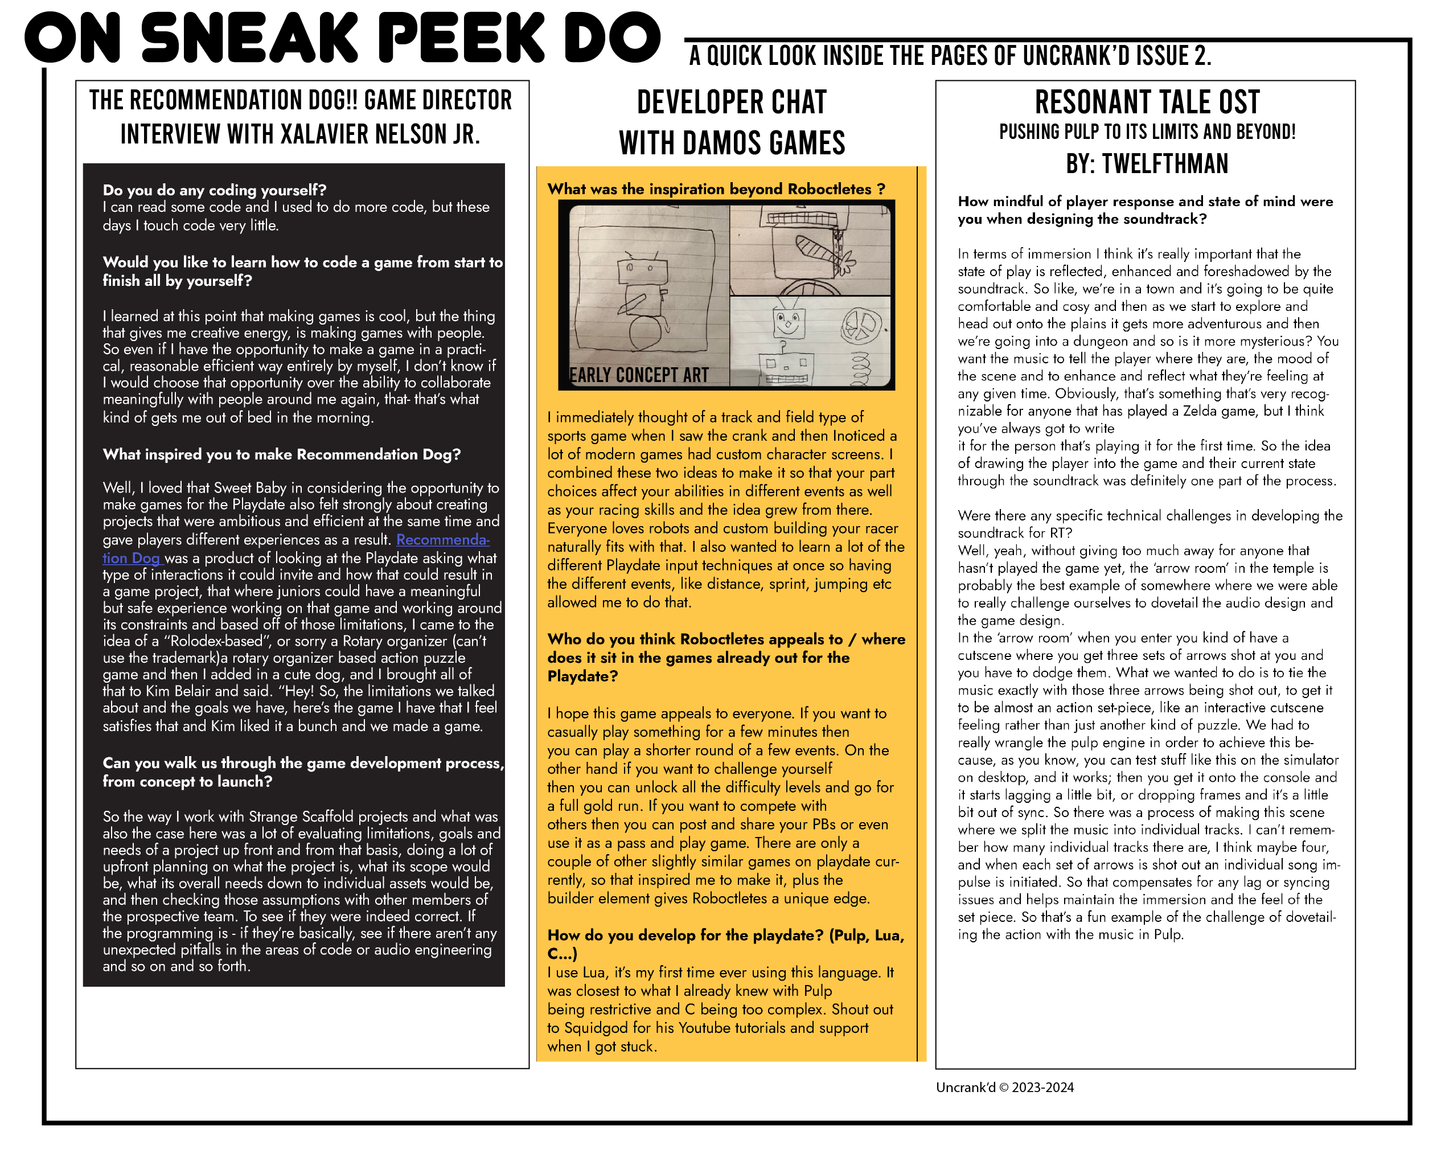 Uncrank'd Issue 2 (print)